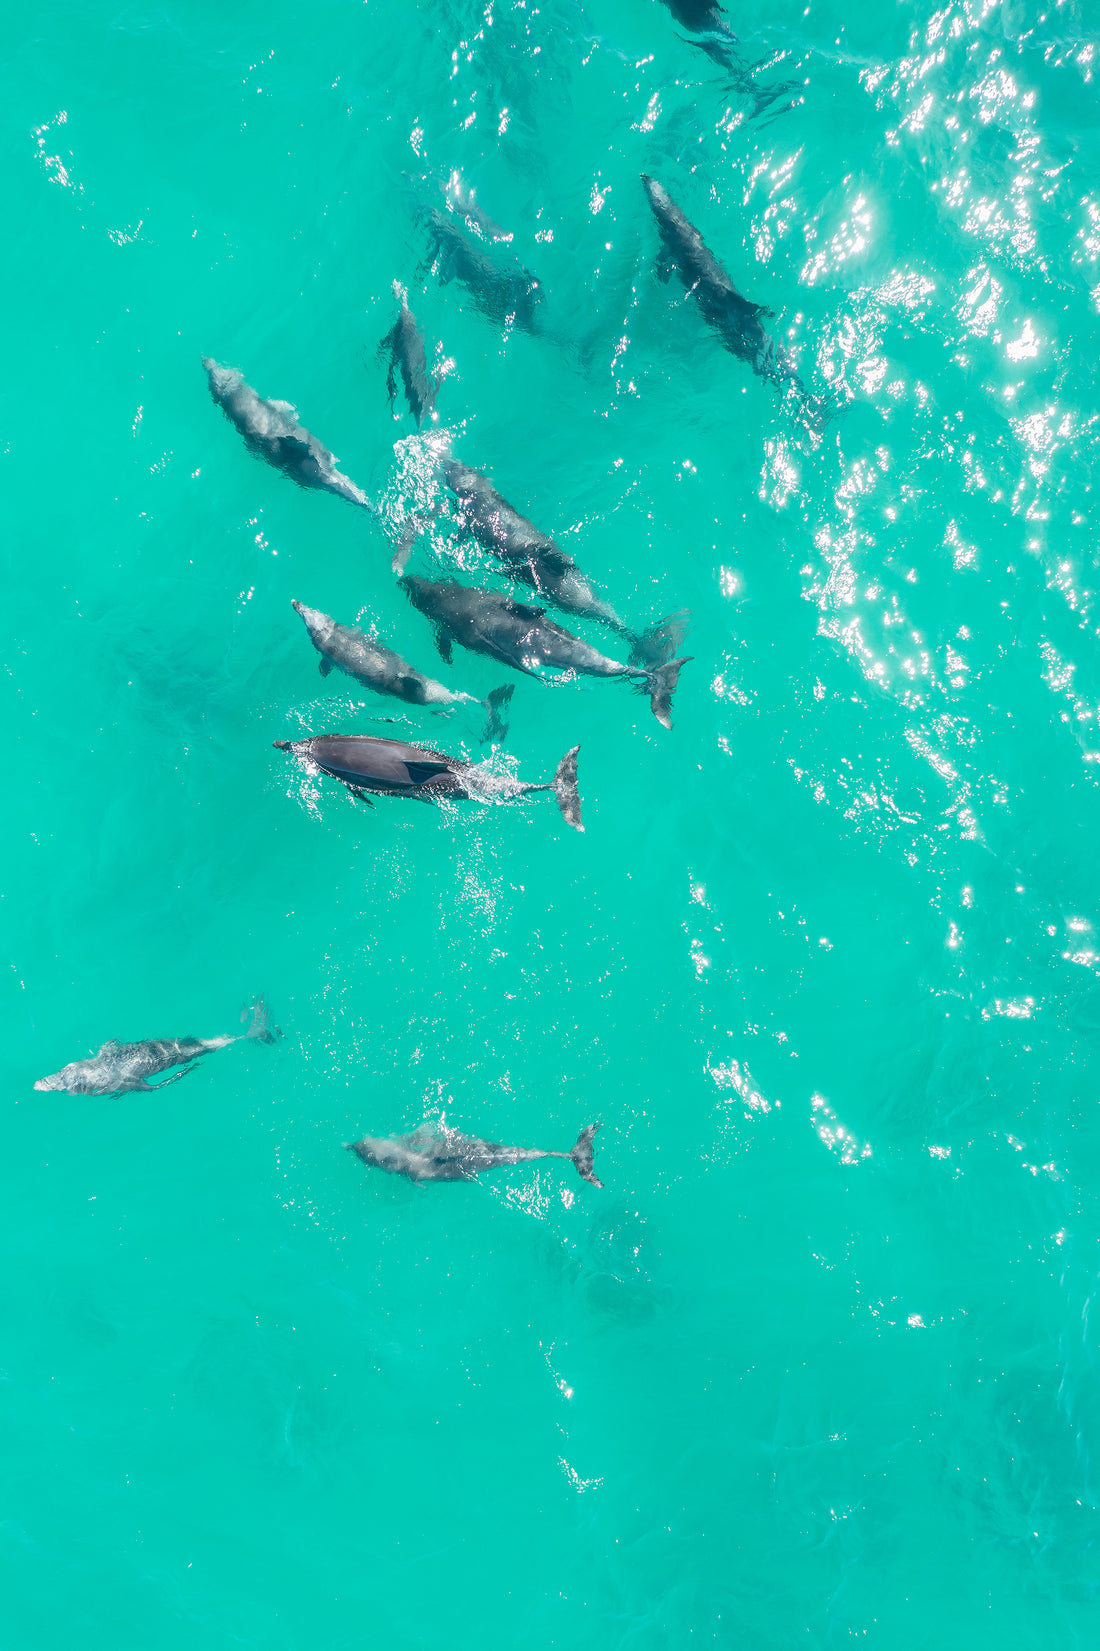 Dolphins come to Bondi